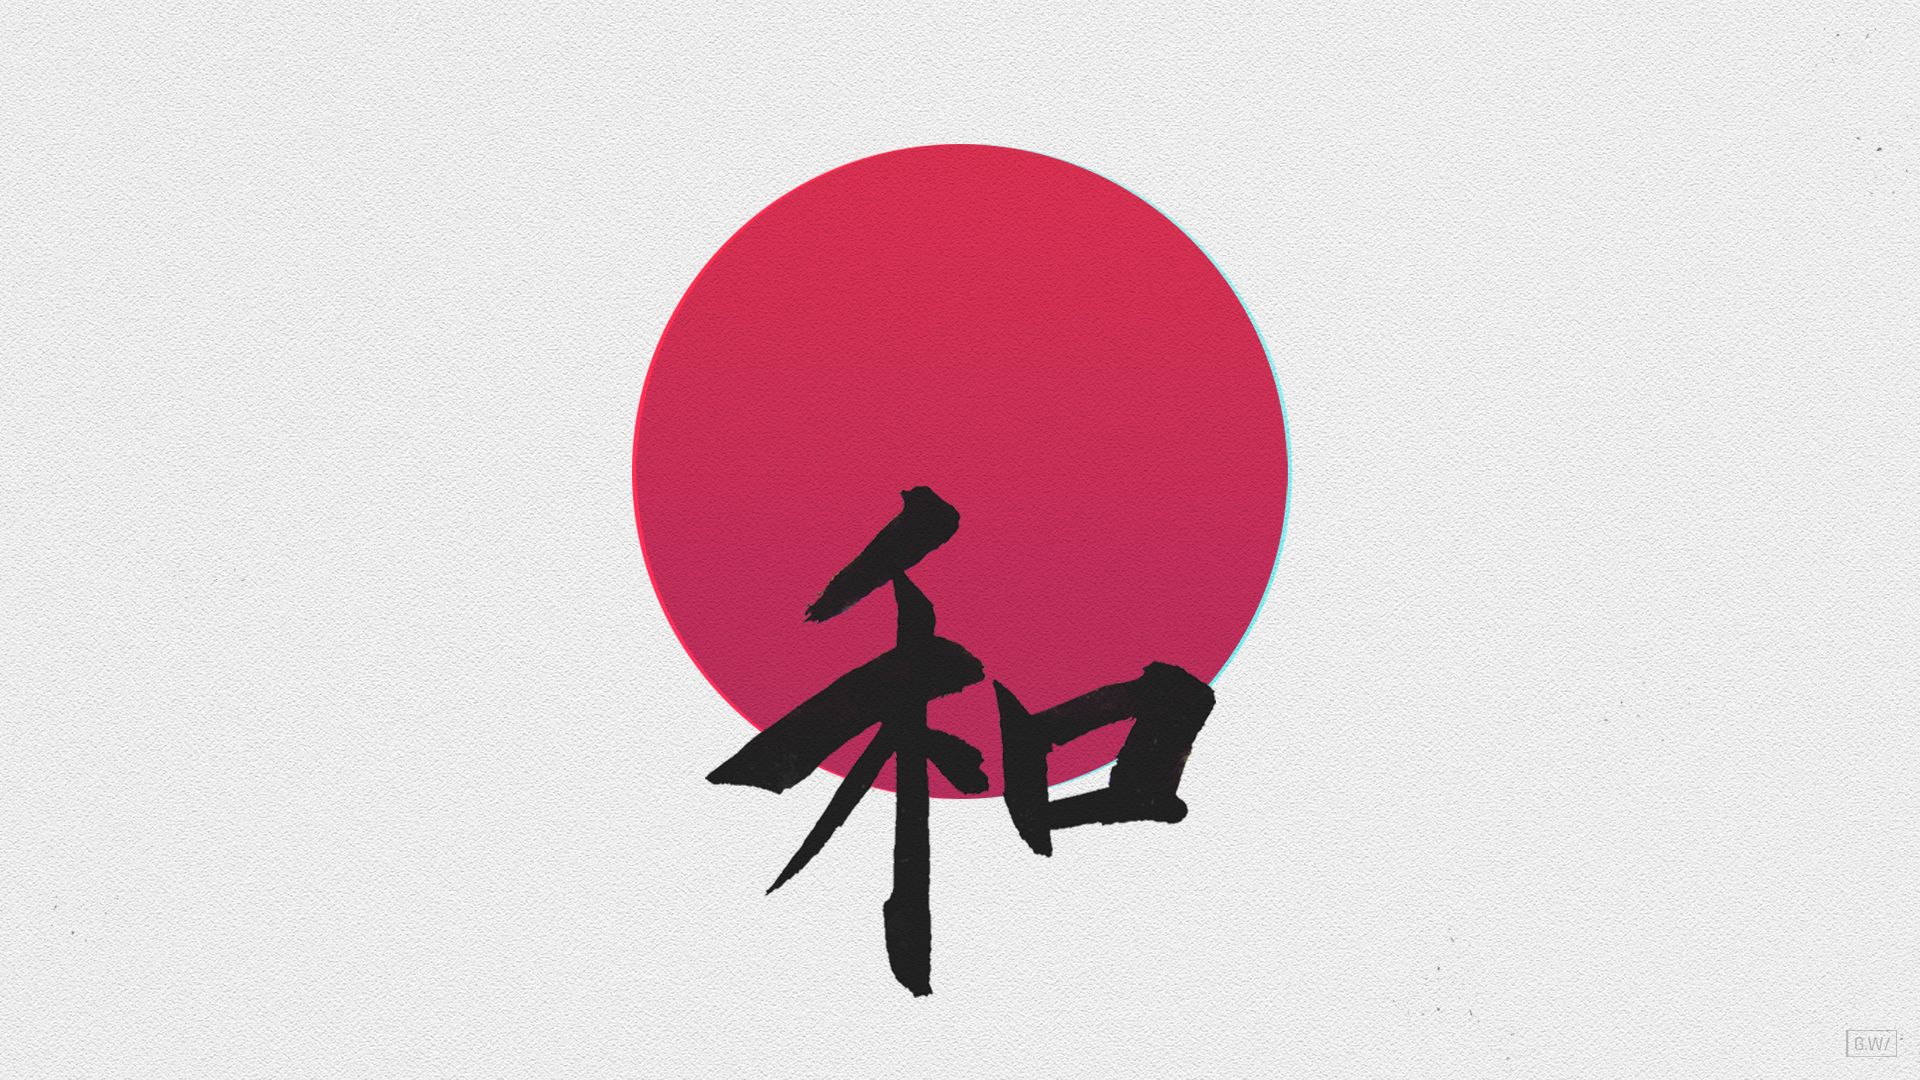 874386 descargar imagen artístico, caligrafia, kanji, paz: fondos de pantalla y protectores de pantalla gratis